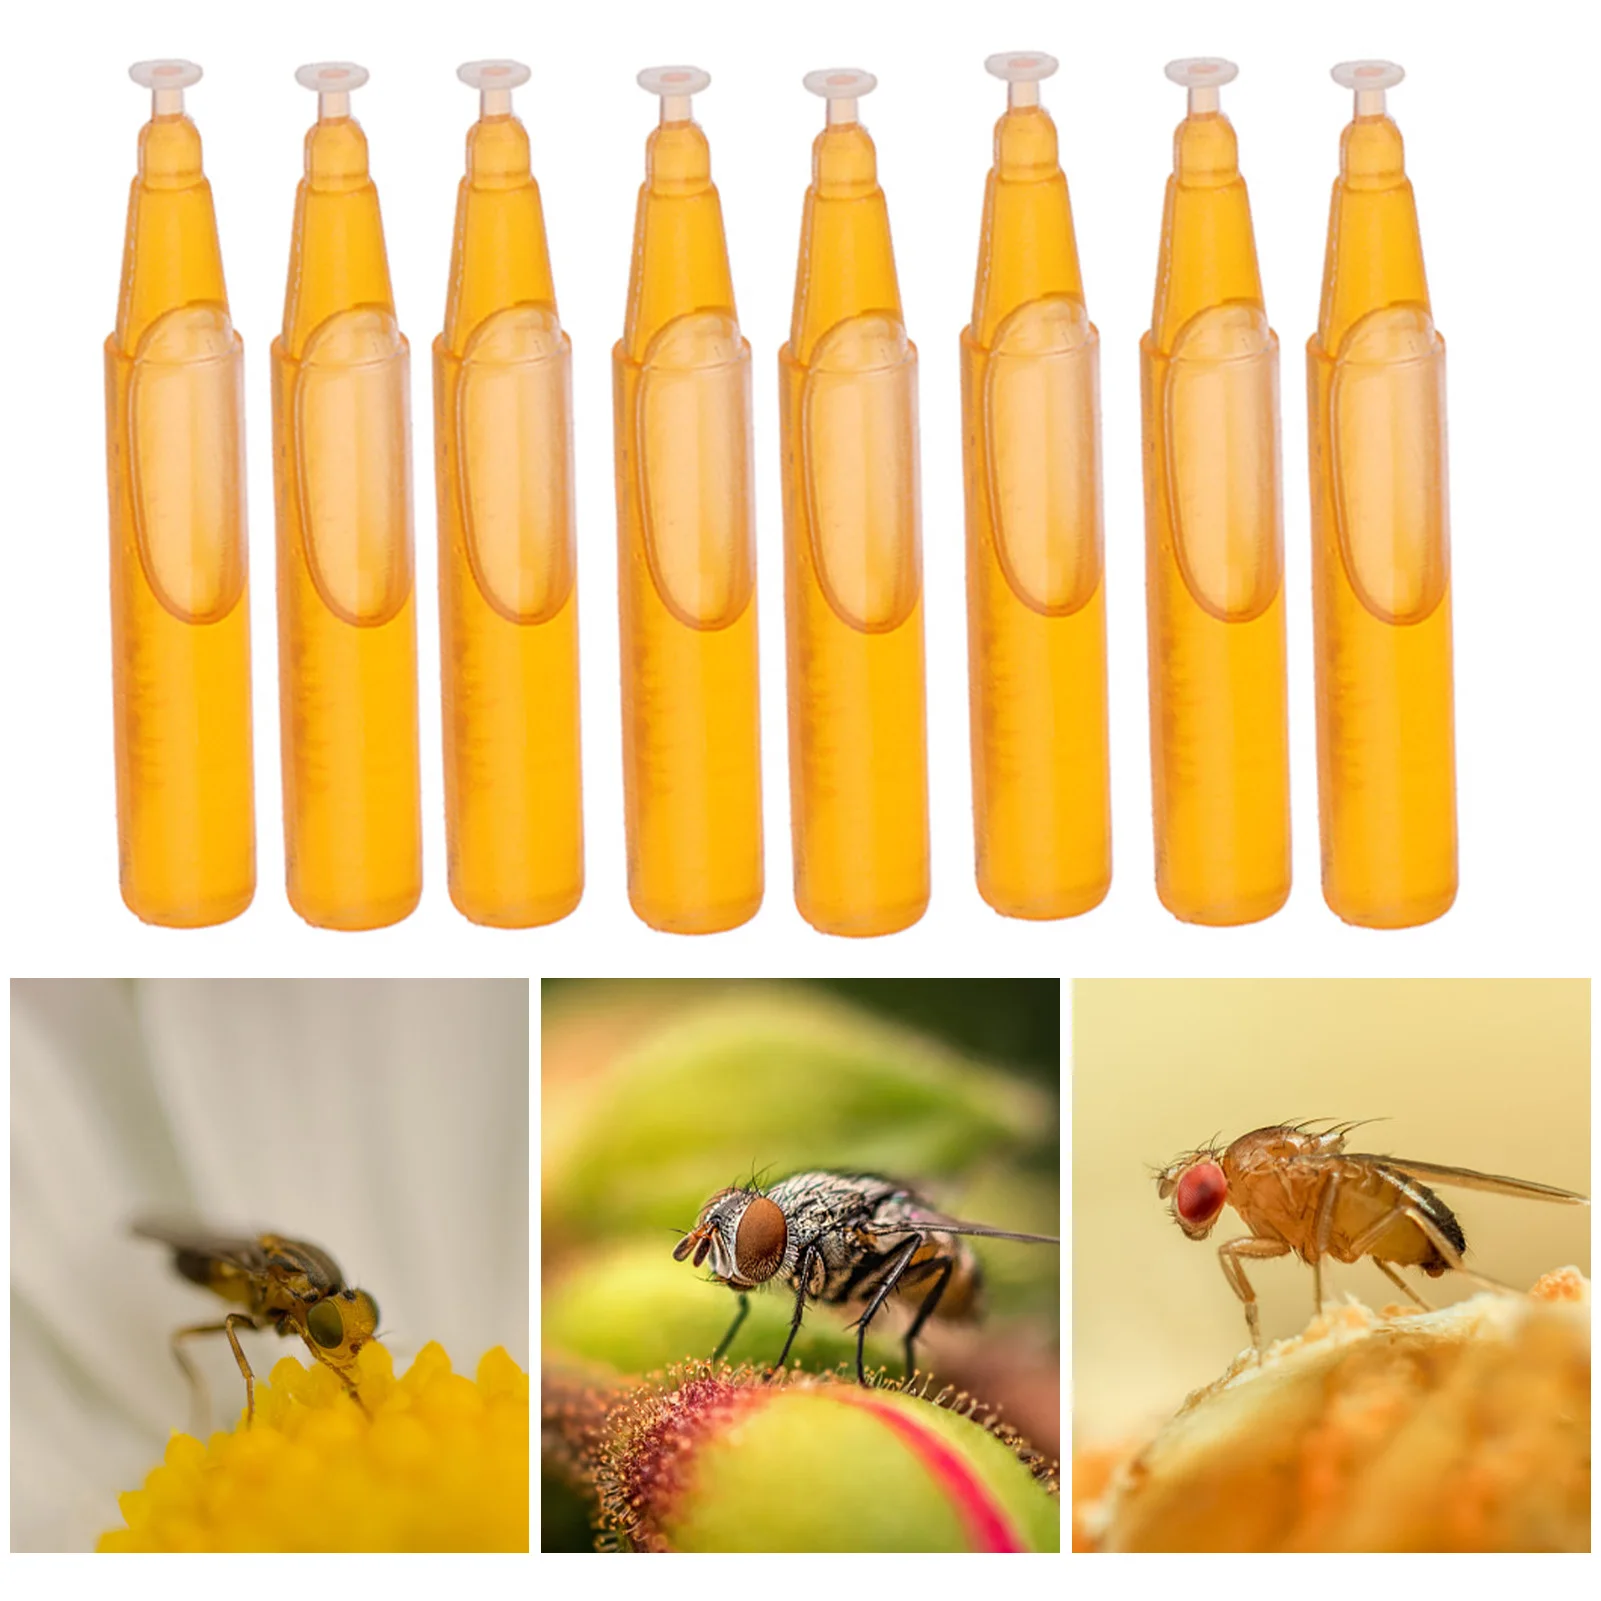 

10pcs Liquid Fruit Fly Killer Outdoor Fruit Fly Attractant Drosophila Attractant for Gardens Backyards Greenhouses Nurseries